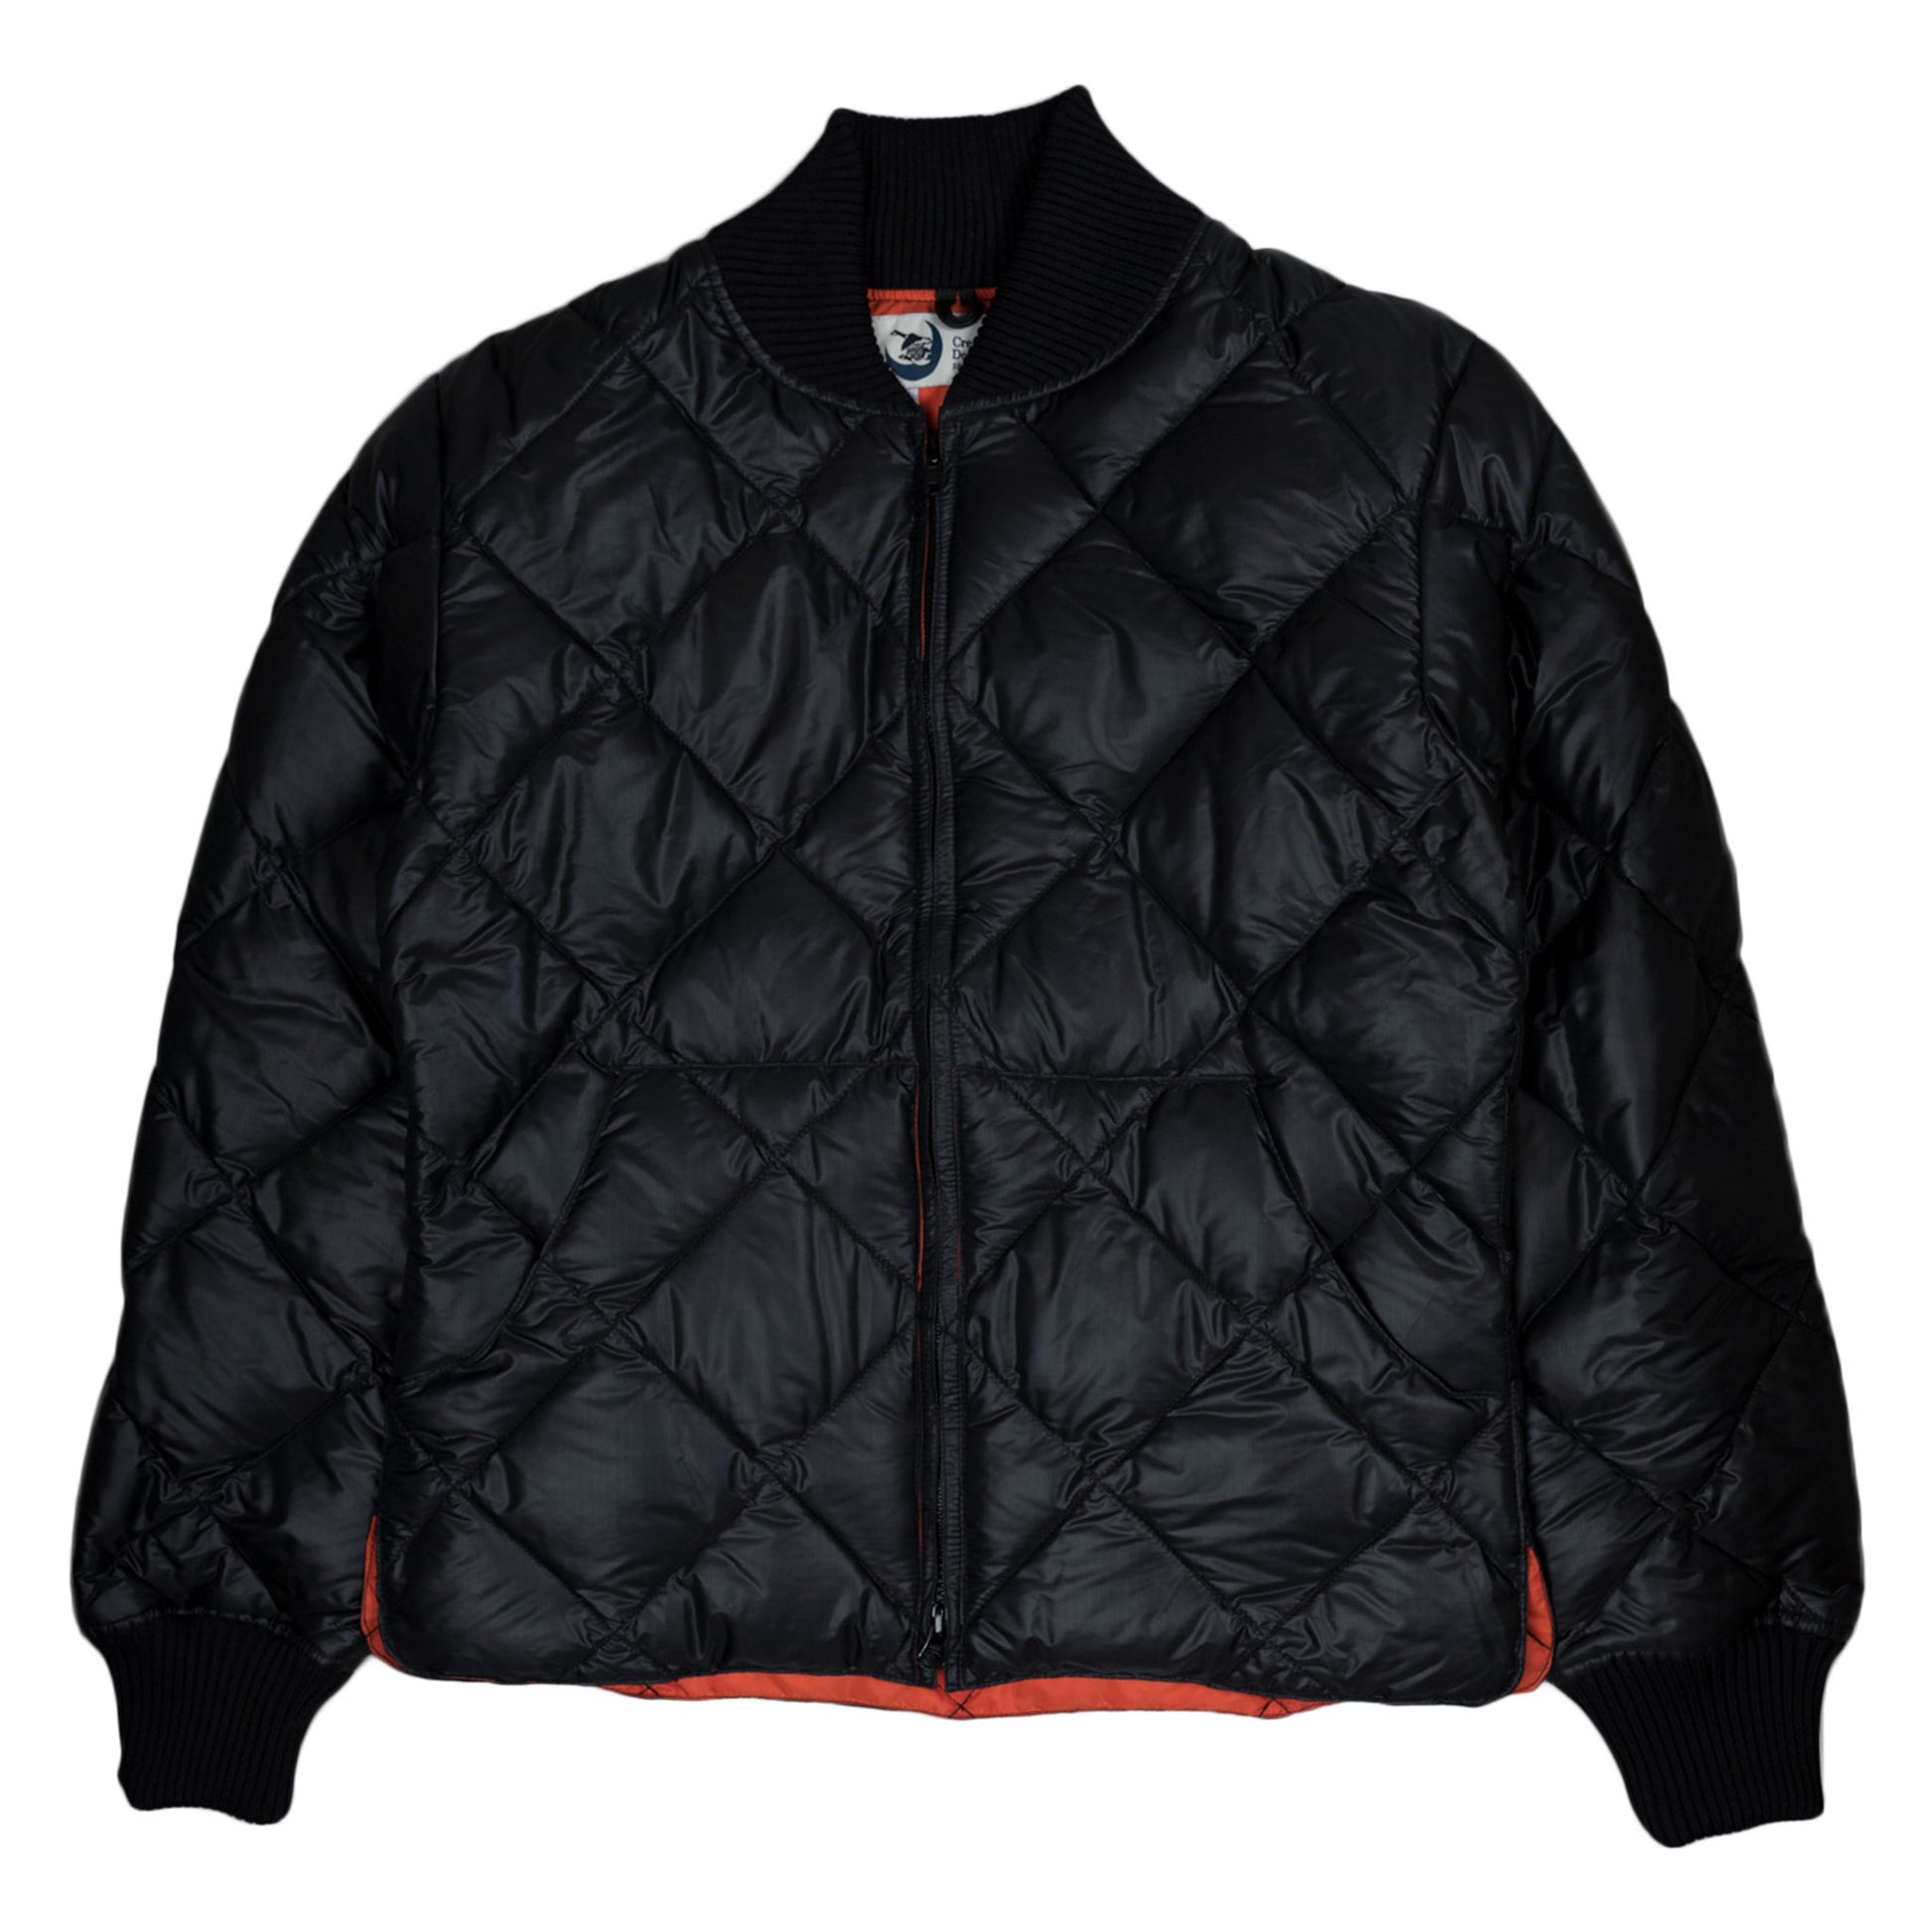 Crescent Down Works Diagonal Quilt Jacket in Black